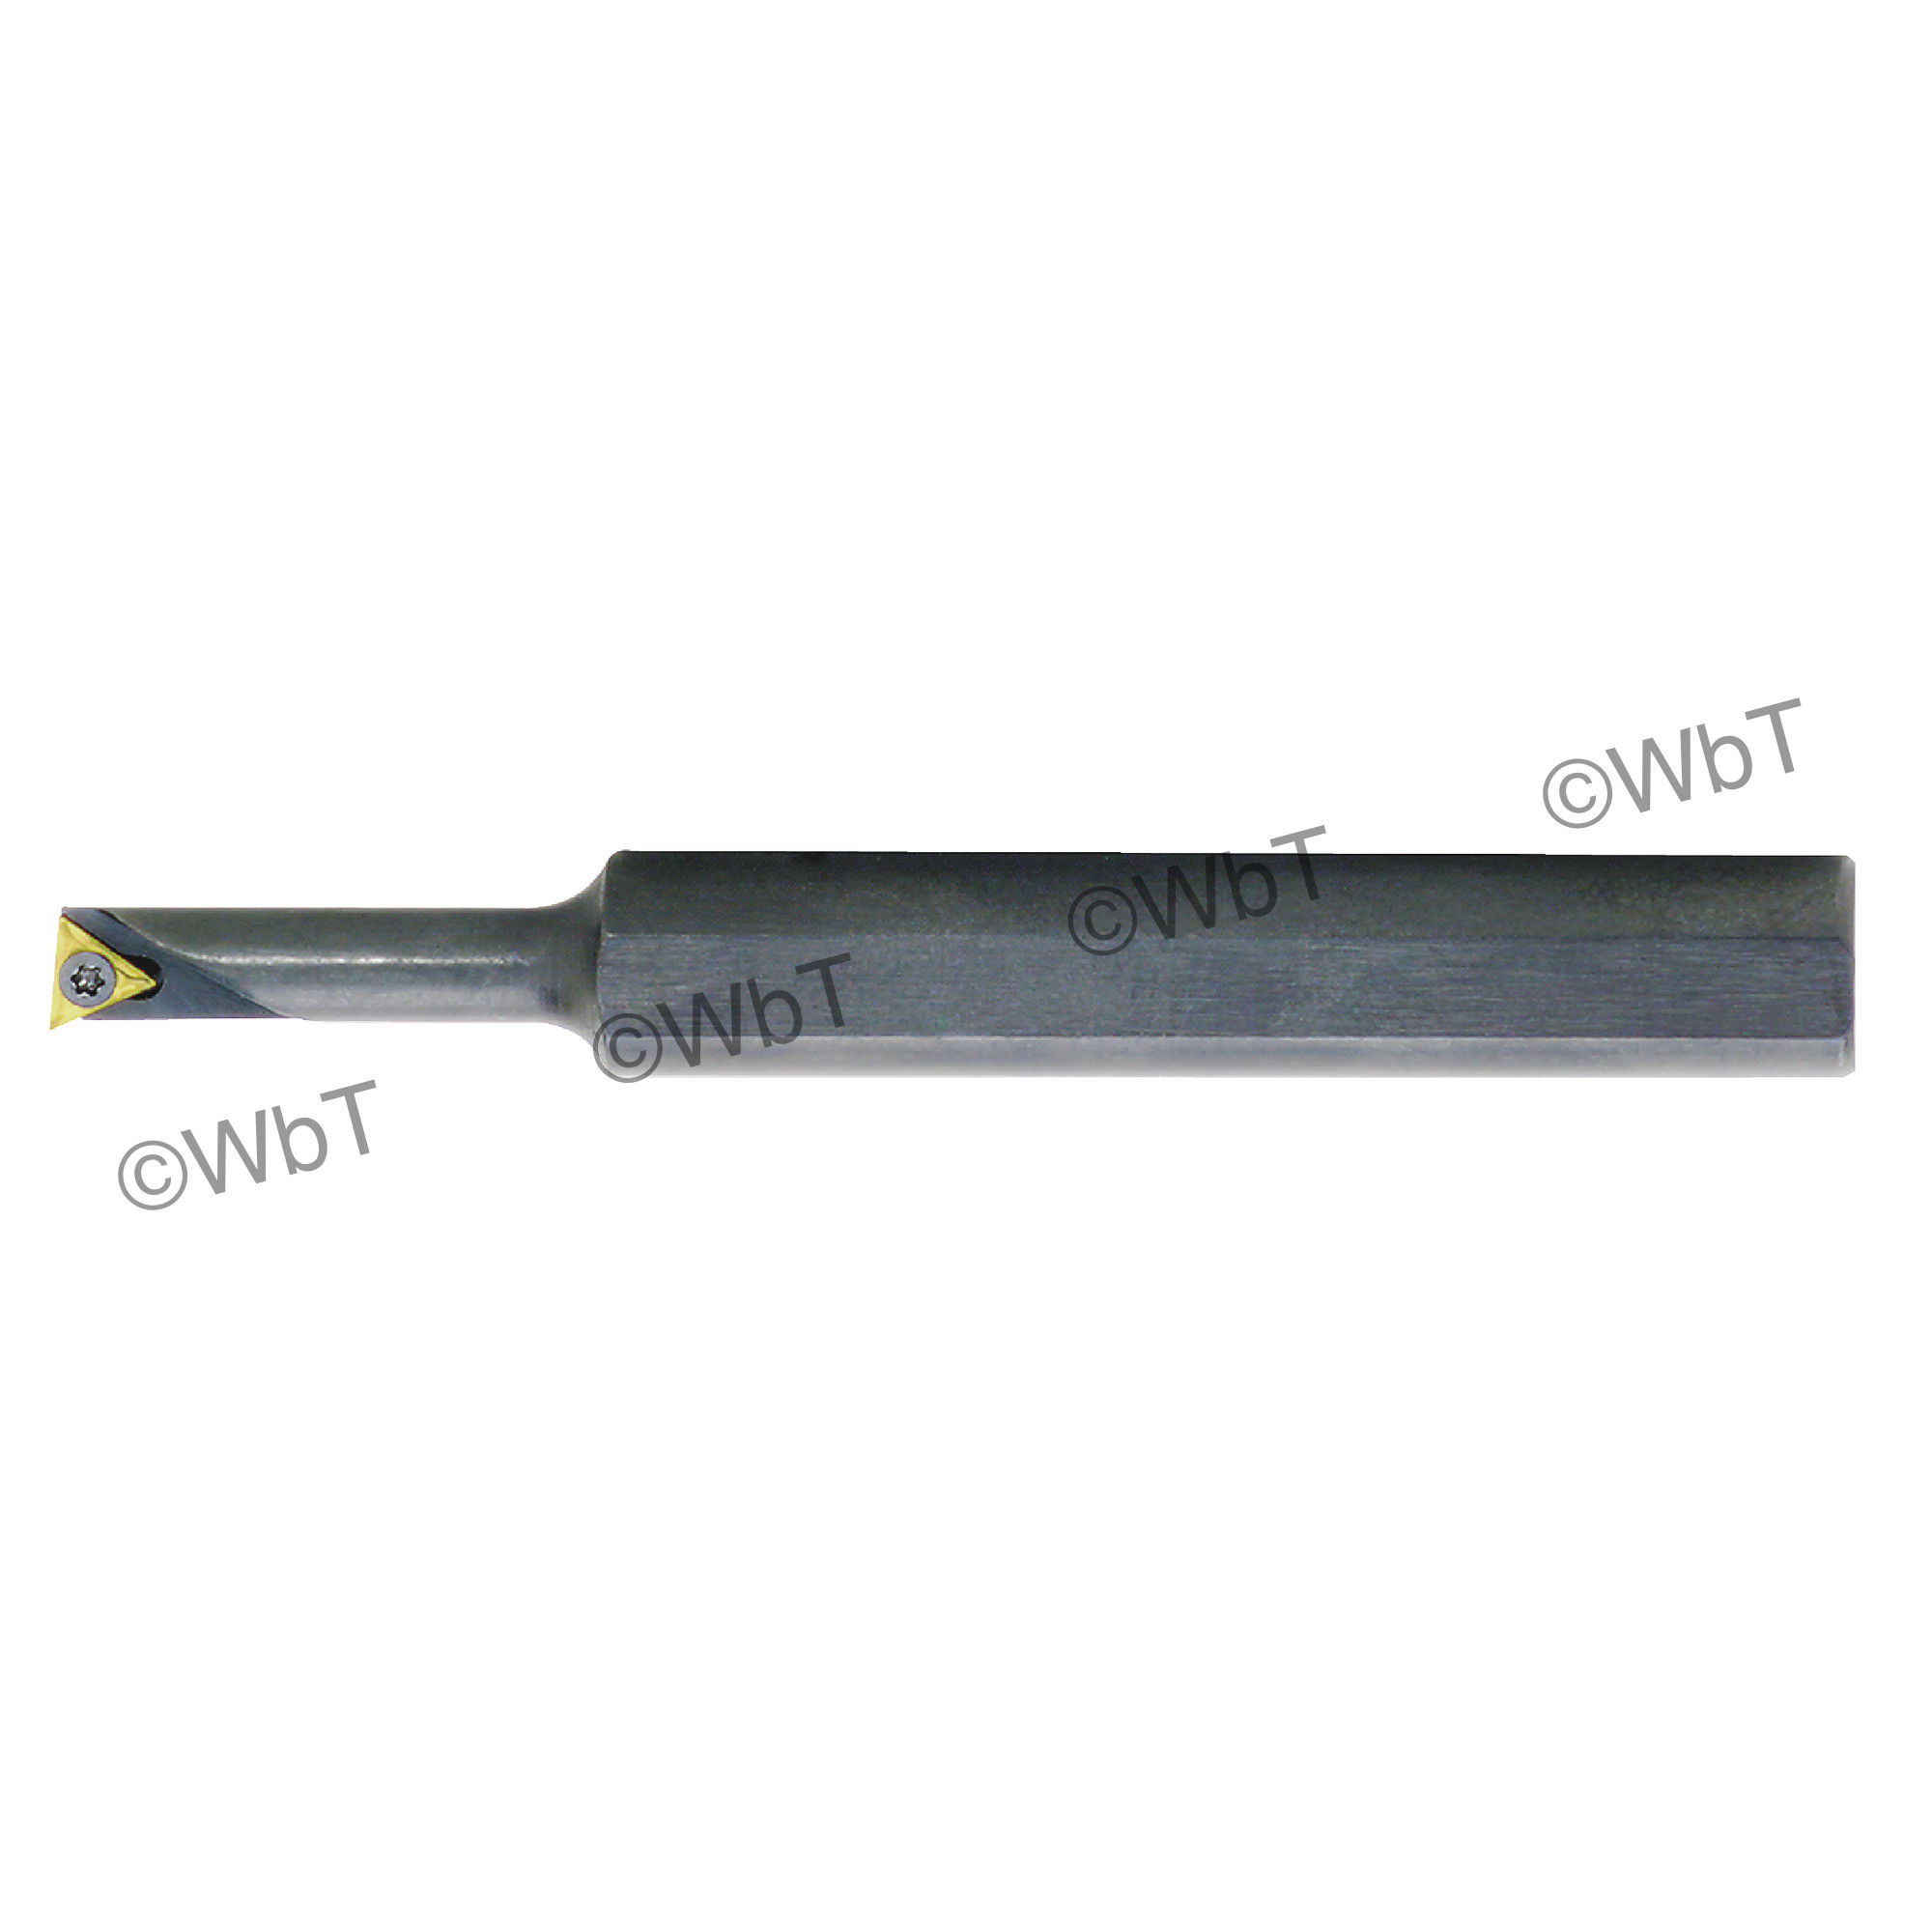 TTC PRODUCTION - NBN6-5-3 / Steel Boring Bar / 0.500@QUOT: Shank / TCMT1.210.5 / Right Hand